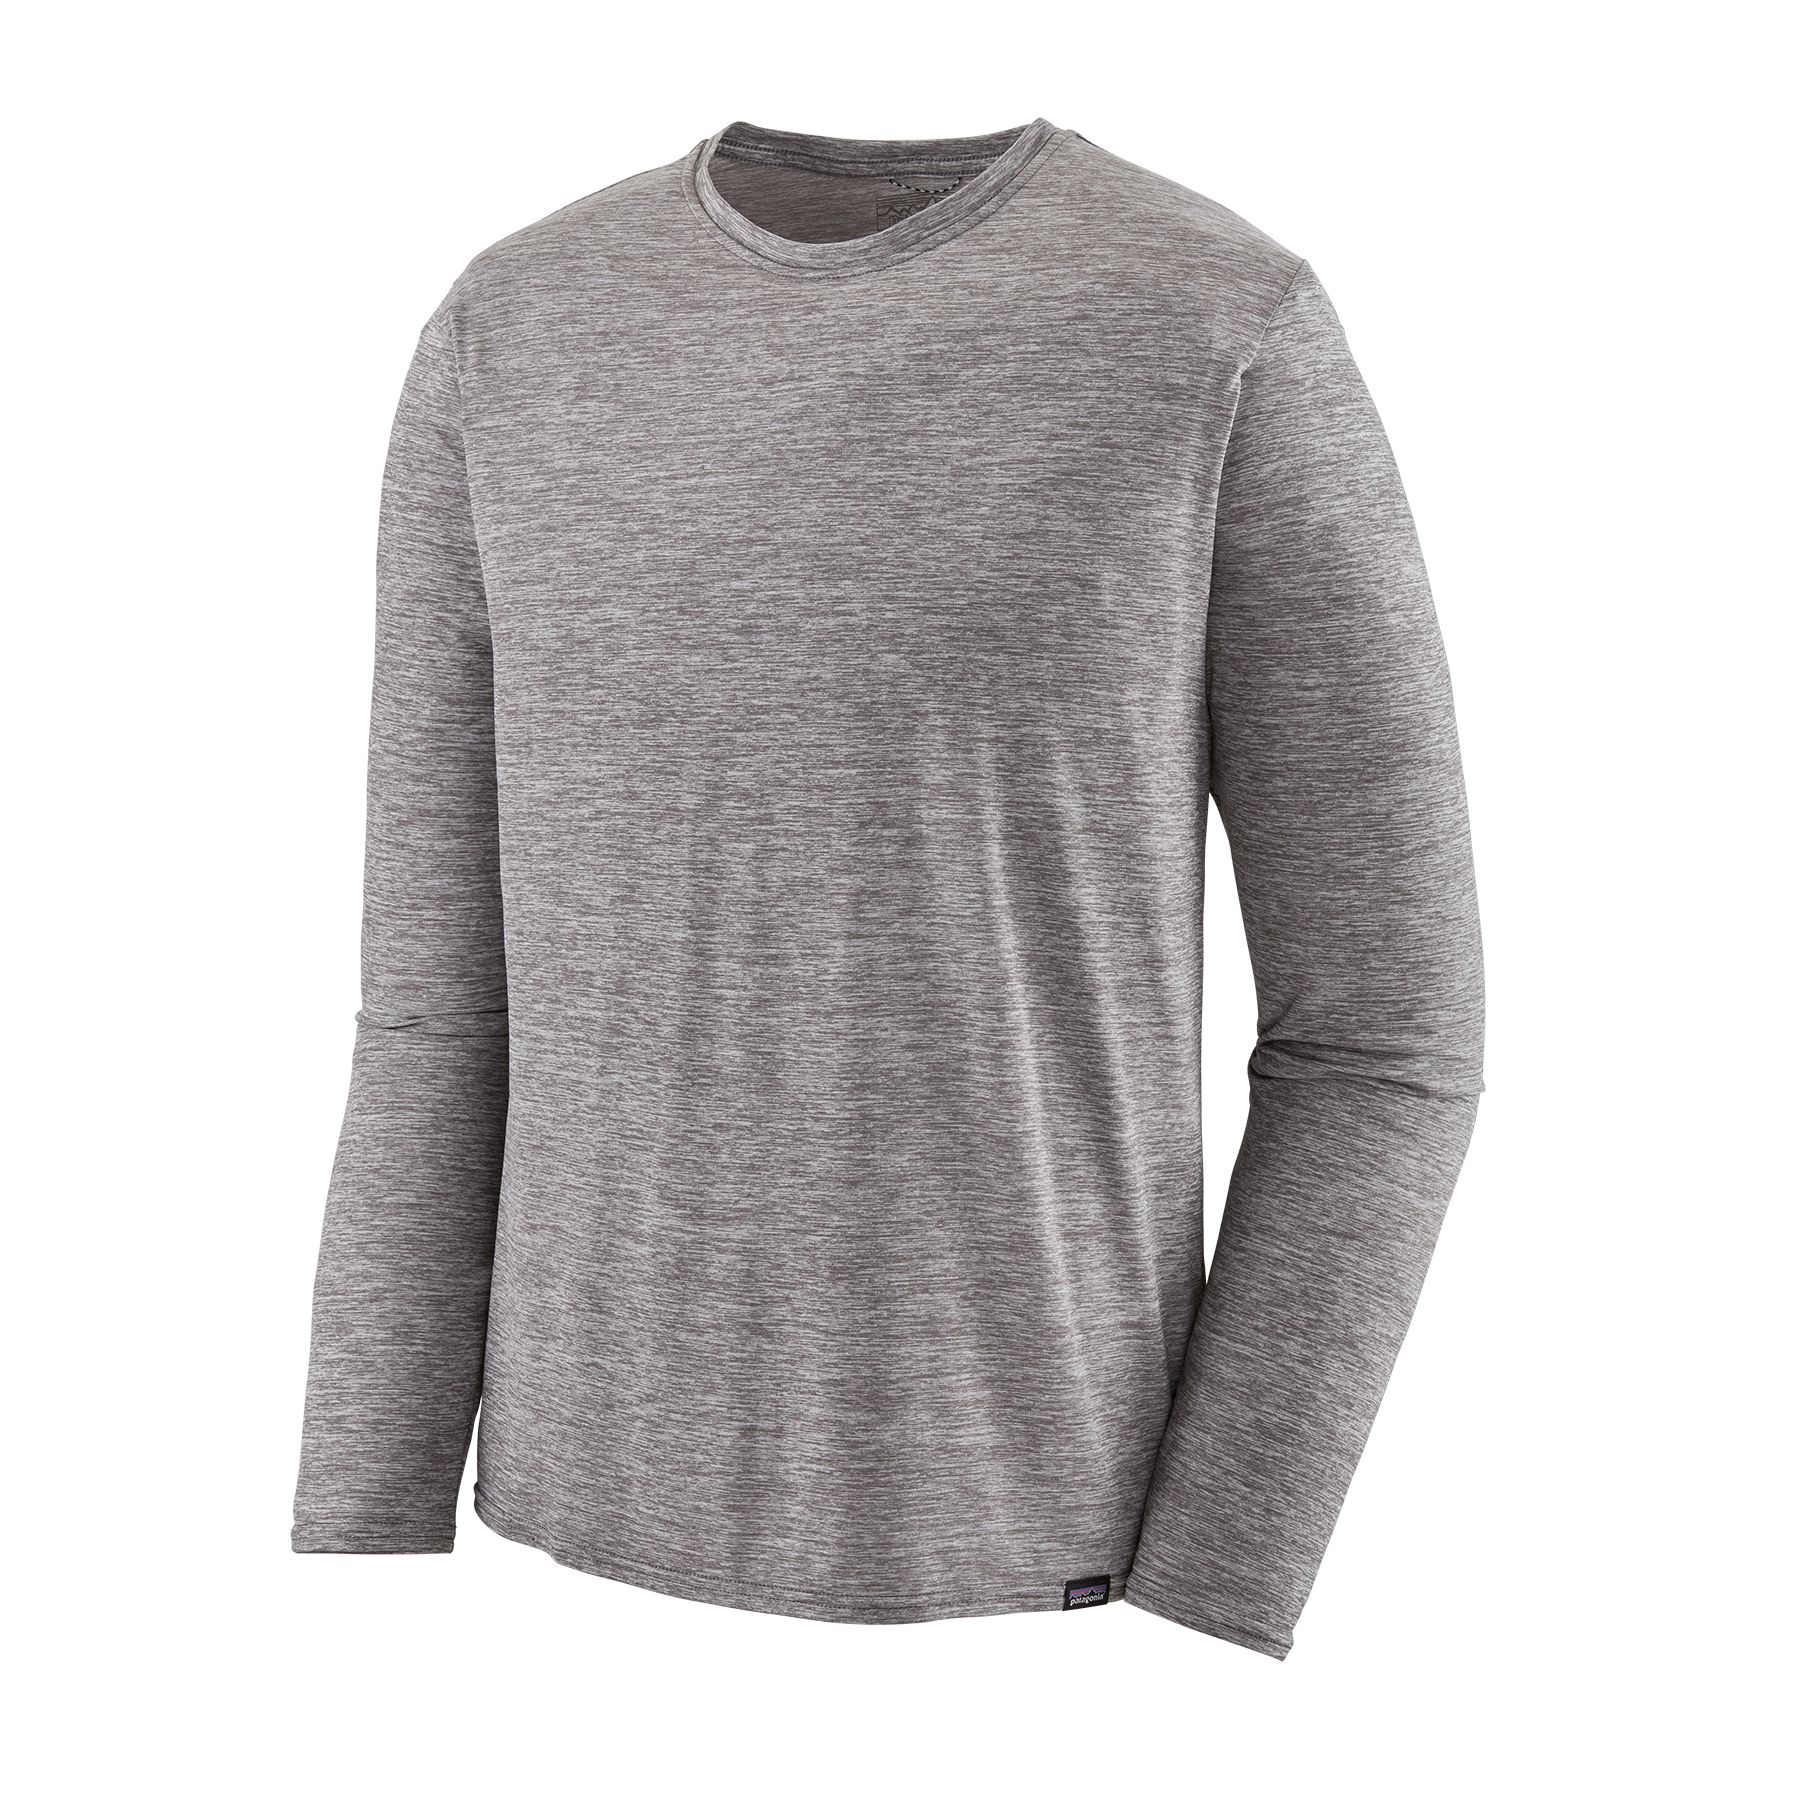 Men's Cap Cool Daily Shirt (feather grey)